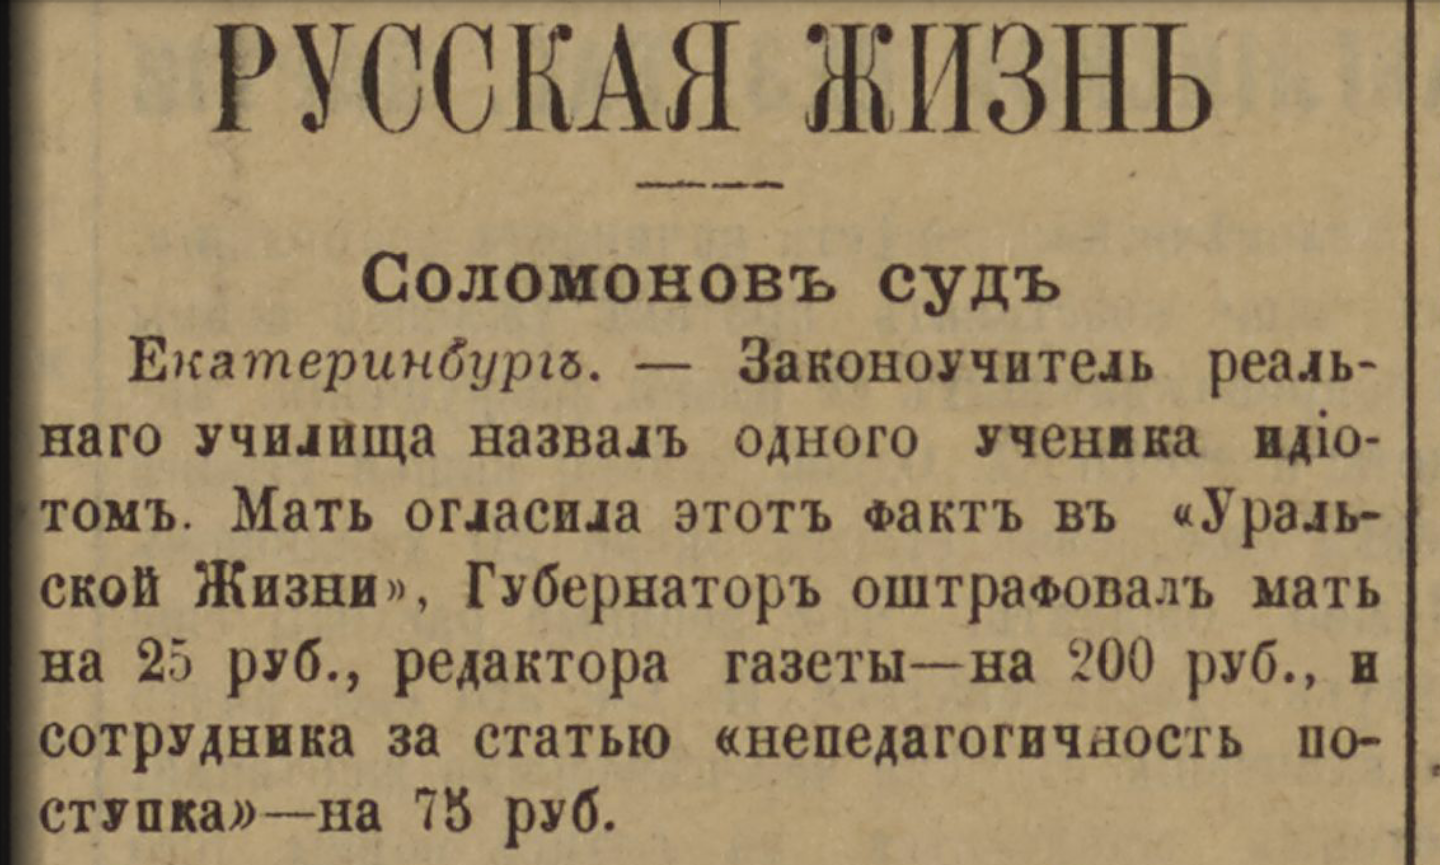 Russian life - Pre-revolutionary Russia, Old newspaper, Newspapers, Longpost, Российская империя